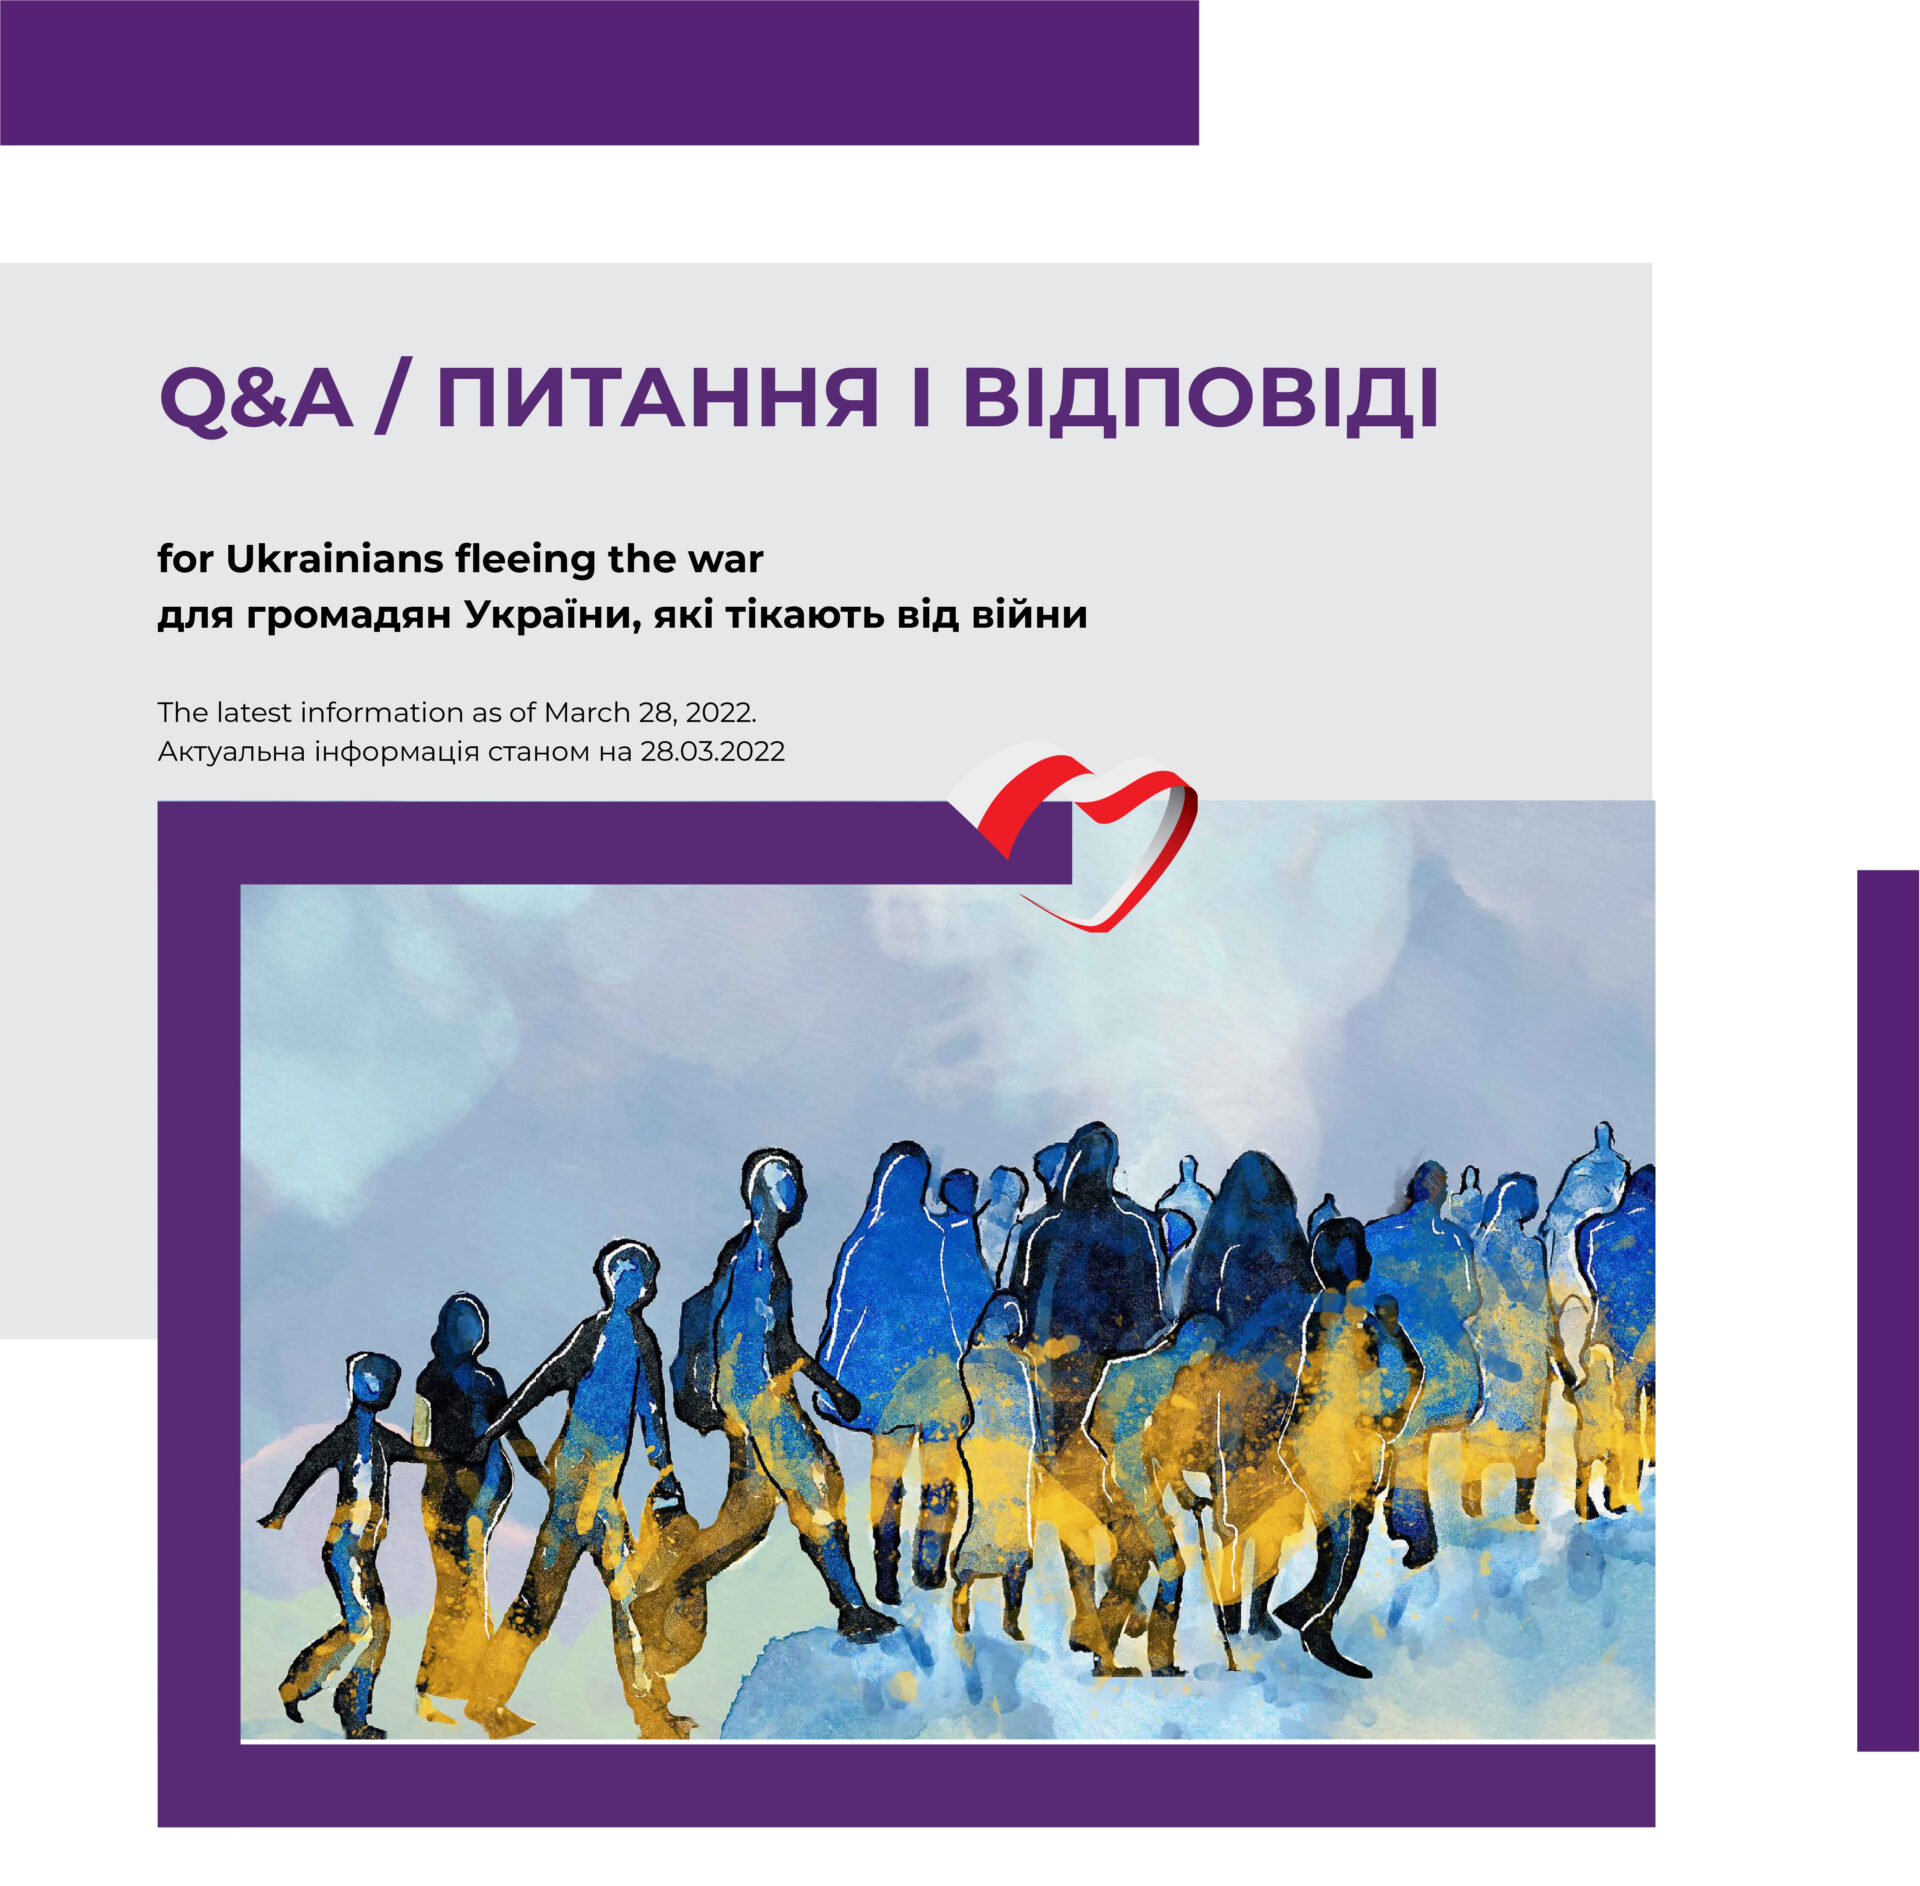 Q&A for Ukrainians fleeing the war. Share it with your Ukrainian friends